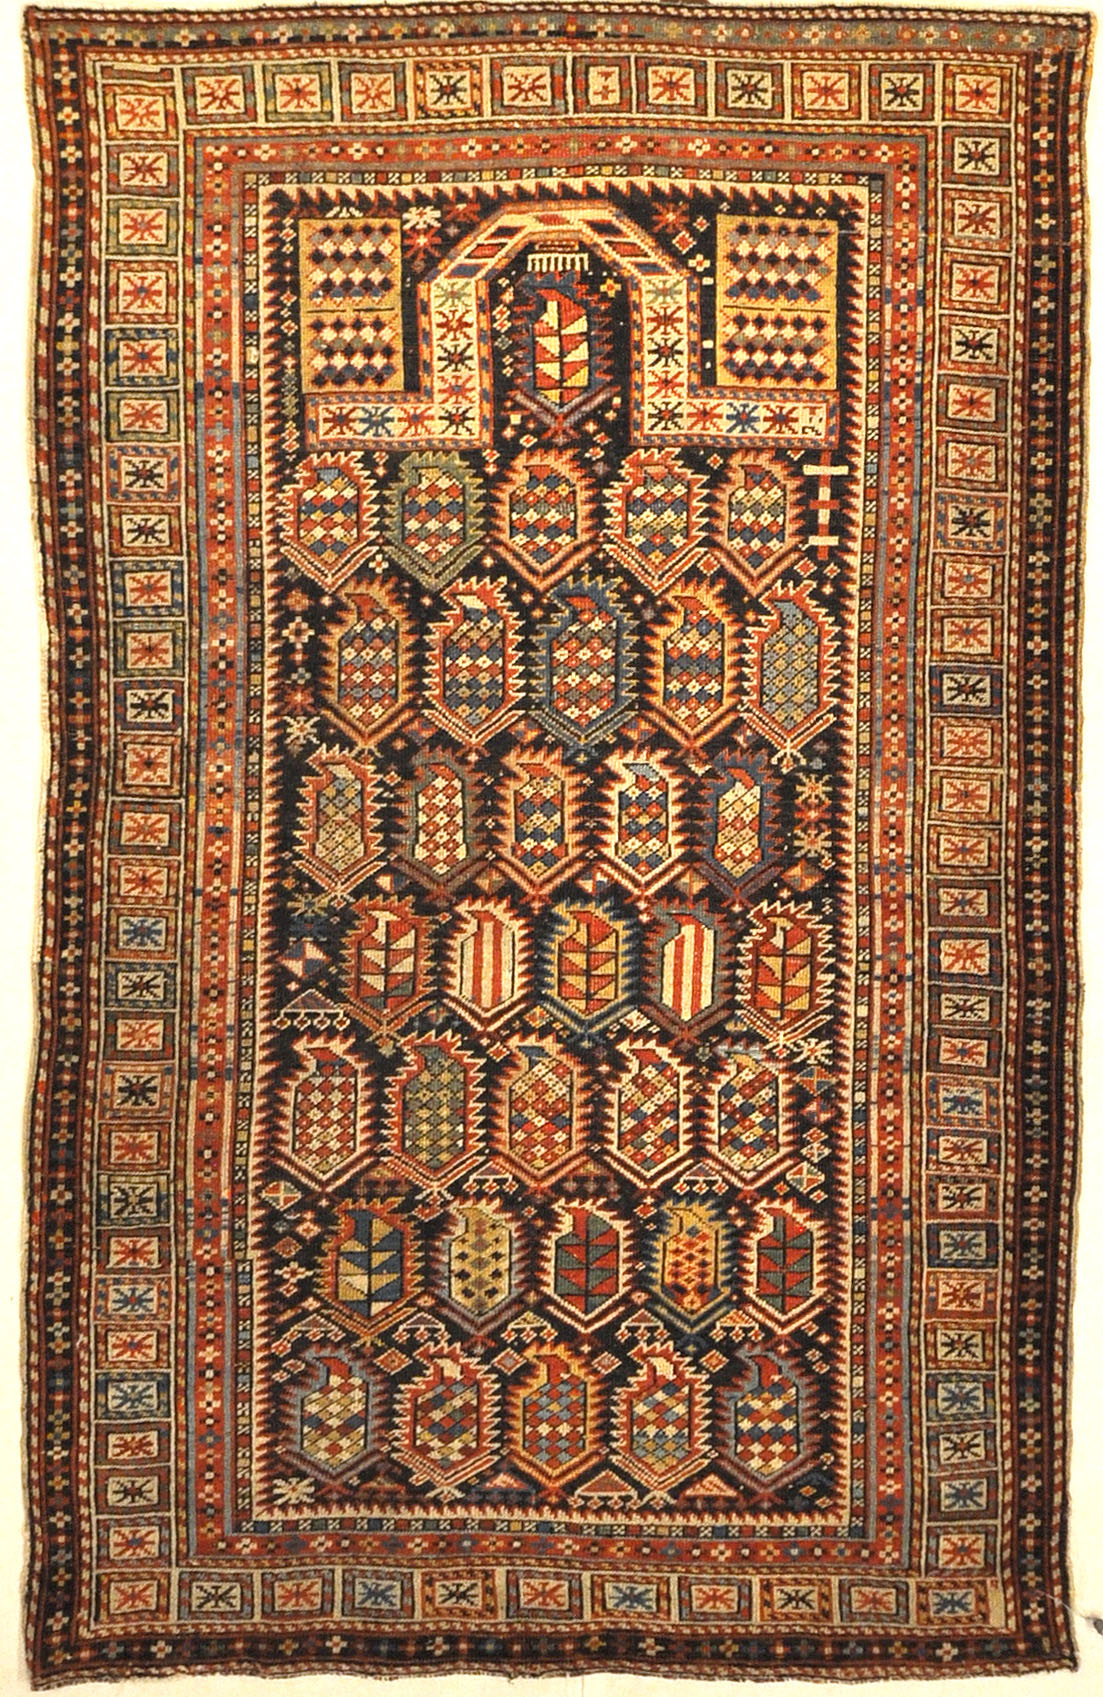 Rarest Antique Maraseli Shirvan Caucasian Prayer Rug. A piece of genuine woven carpet art sold by the Santa Barbara Design Center, Rugs and More.